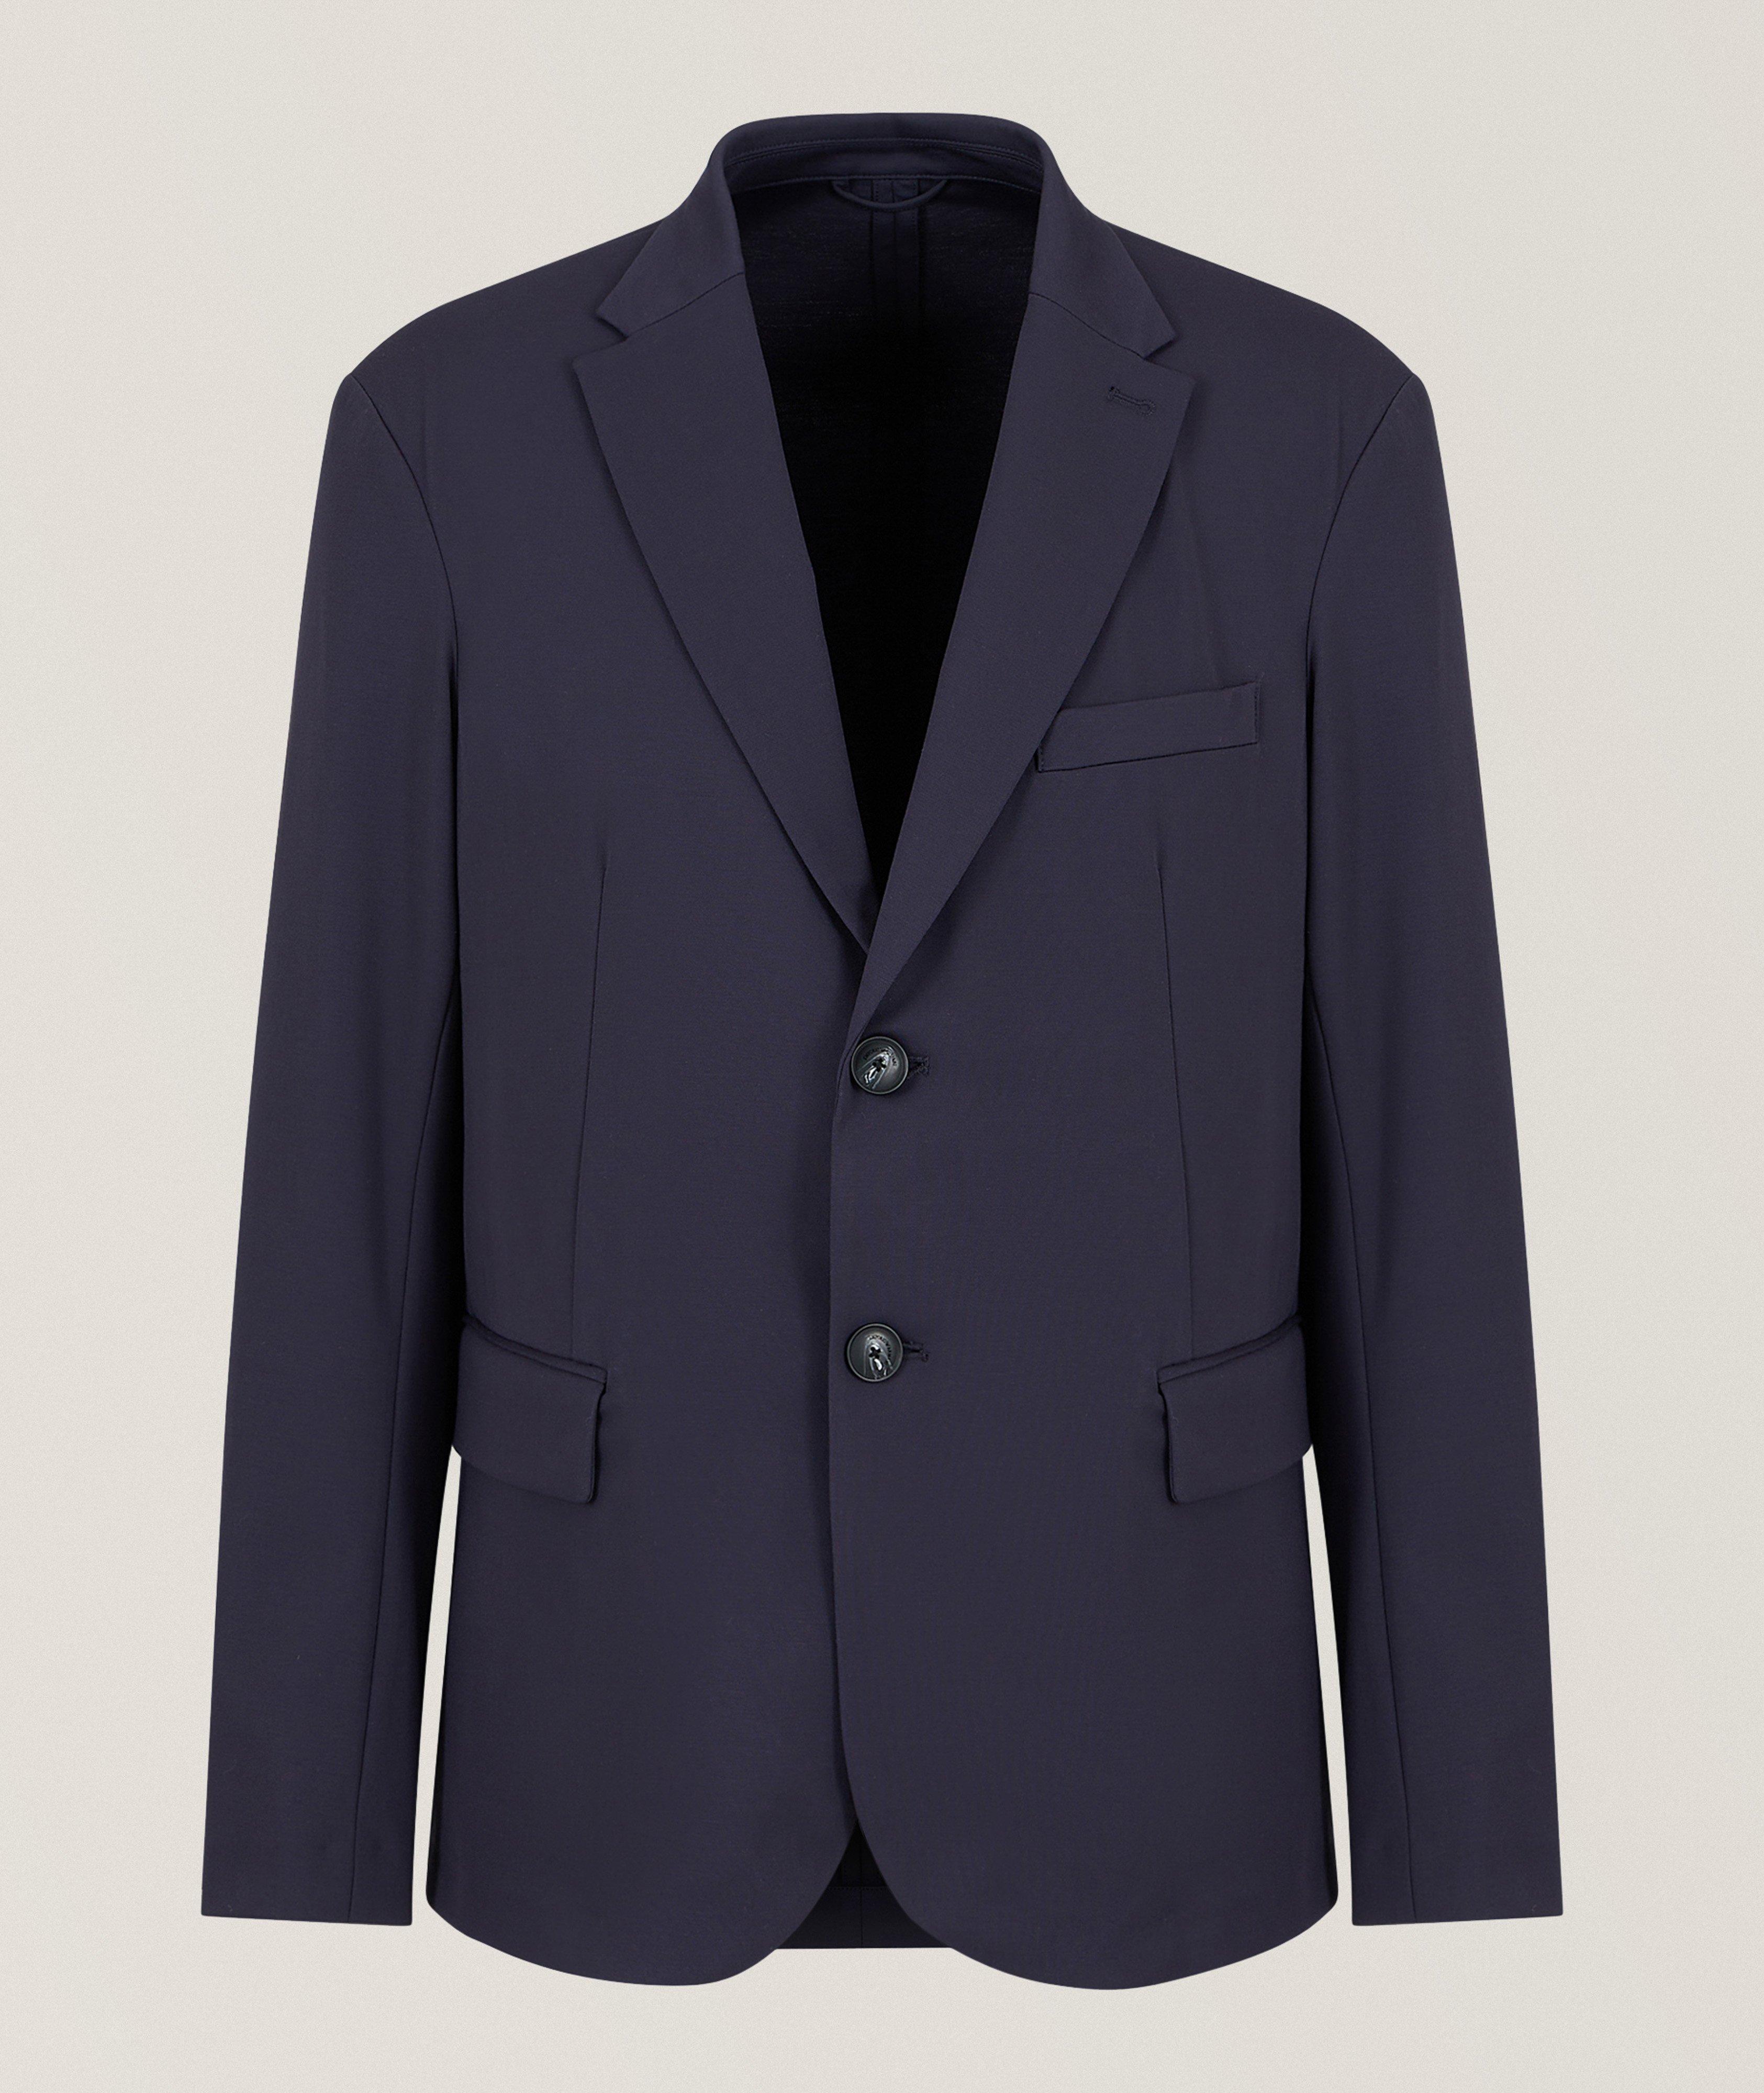 Pedort Men's Casual Blazer Suit Jackets Dinner Sport Coat Party Jacket Black,XL  